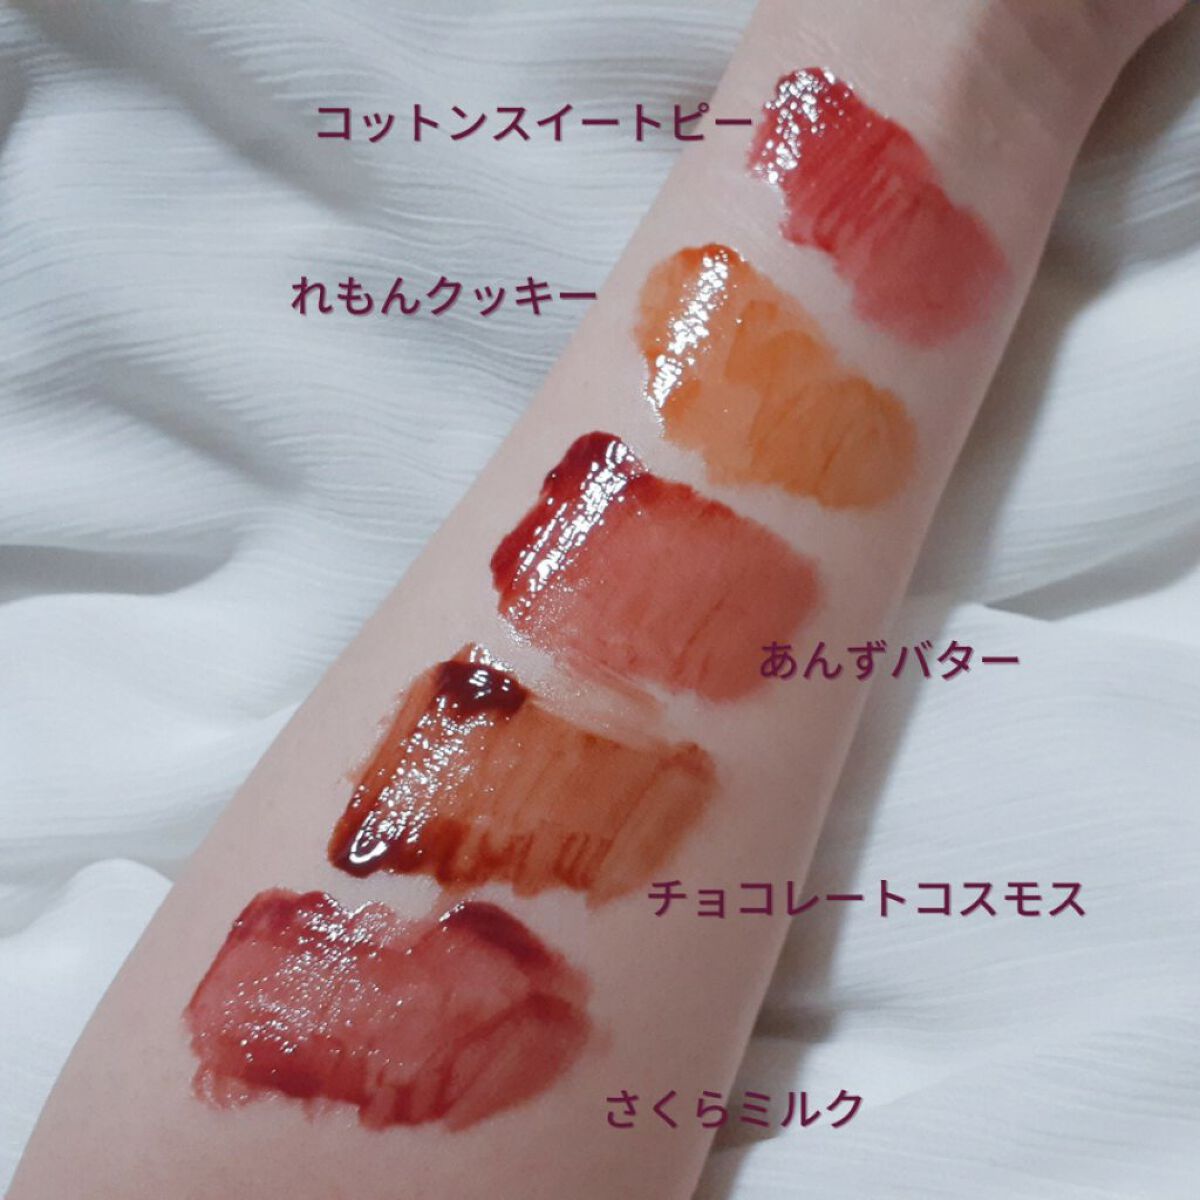 Melty flower lip tint｜haomiiの口コミ - haomii (ハオミー) Melty